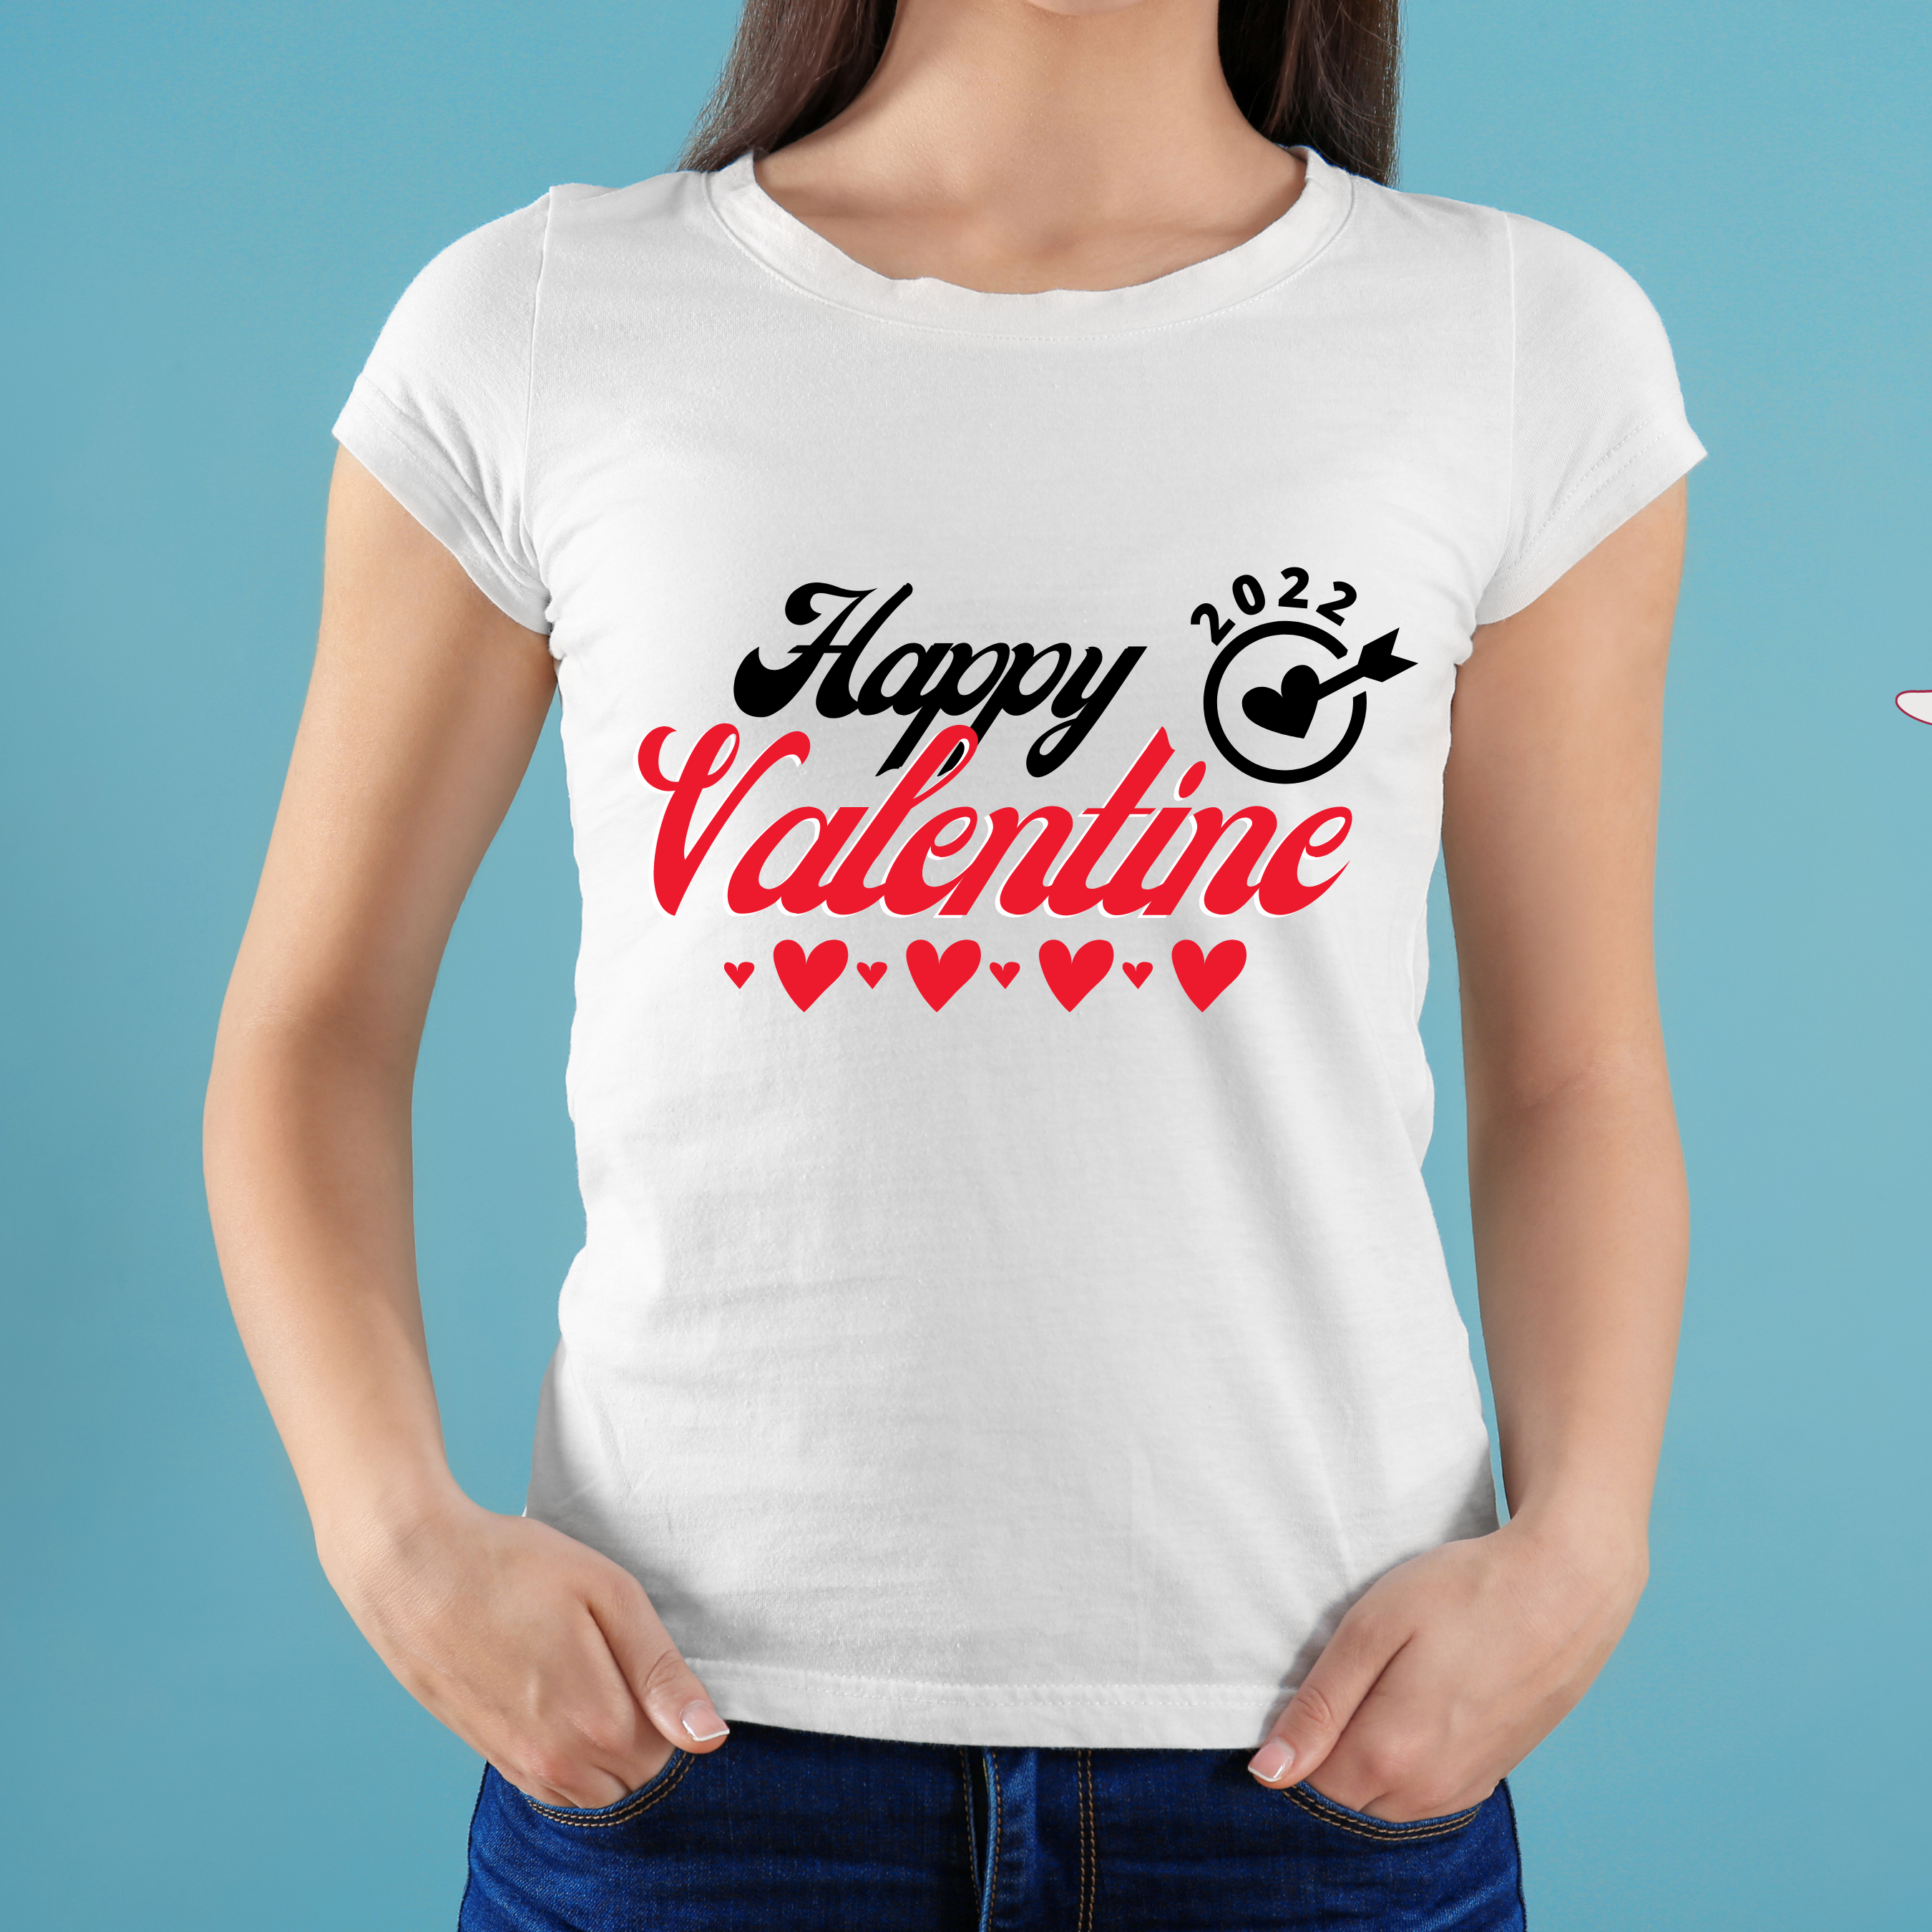 Camisa San Valentin 2